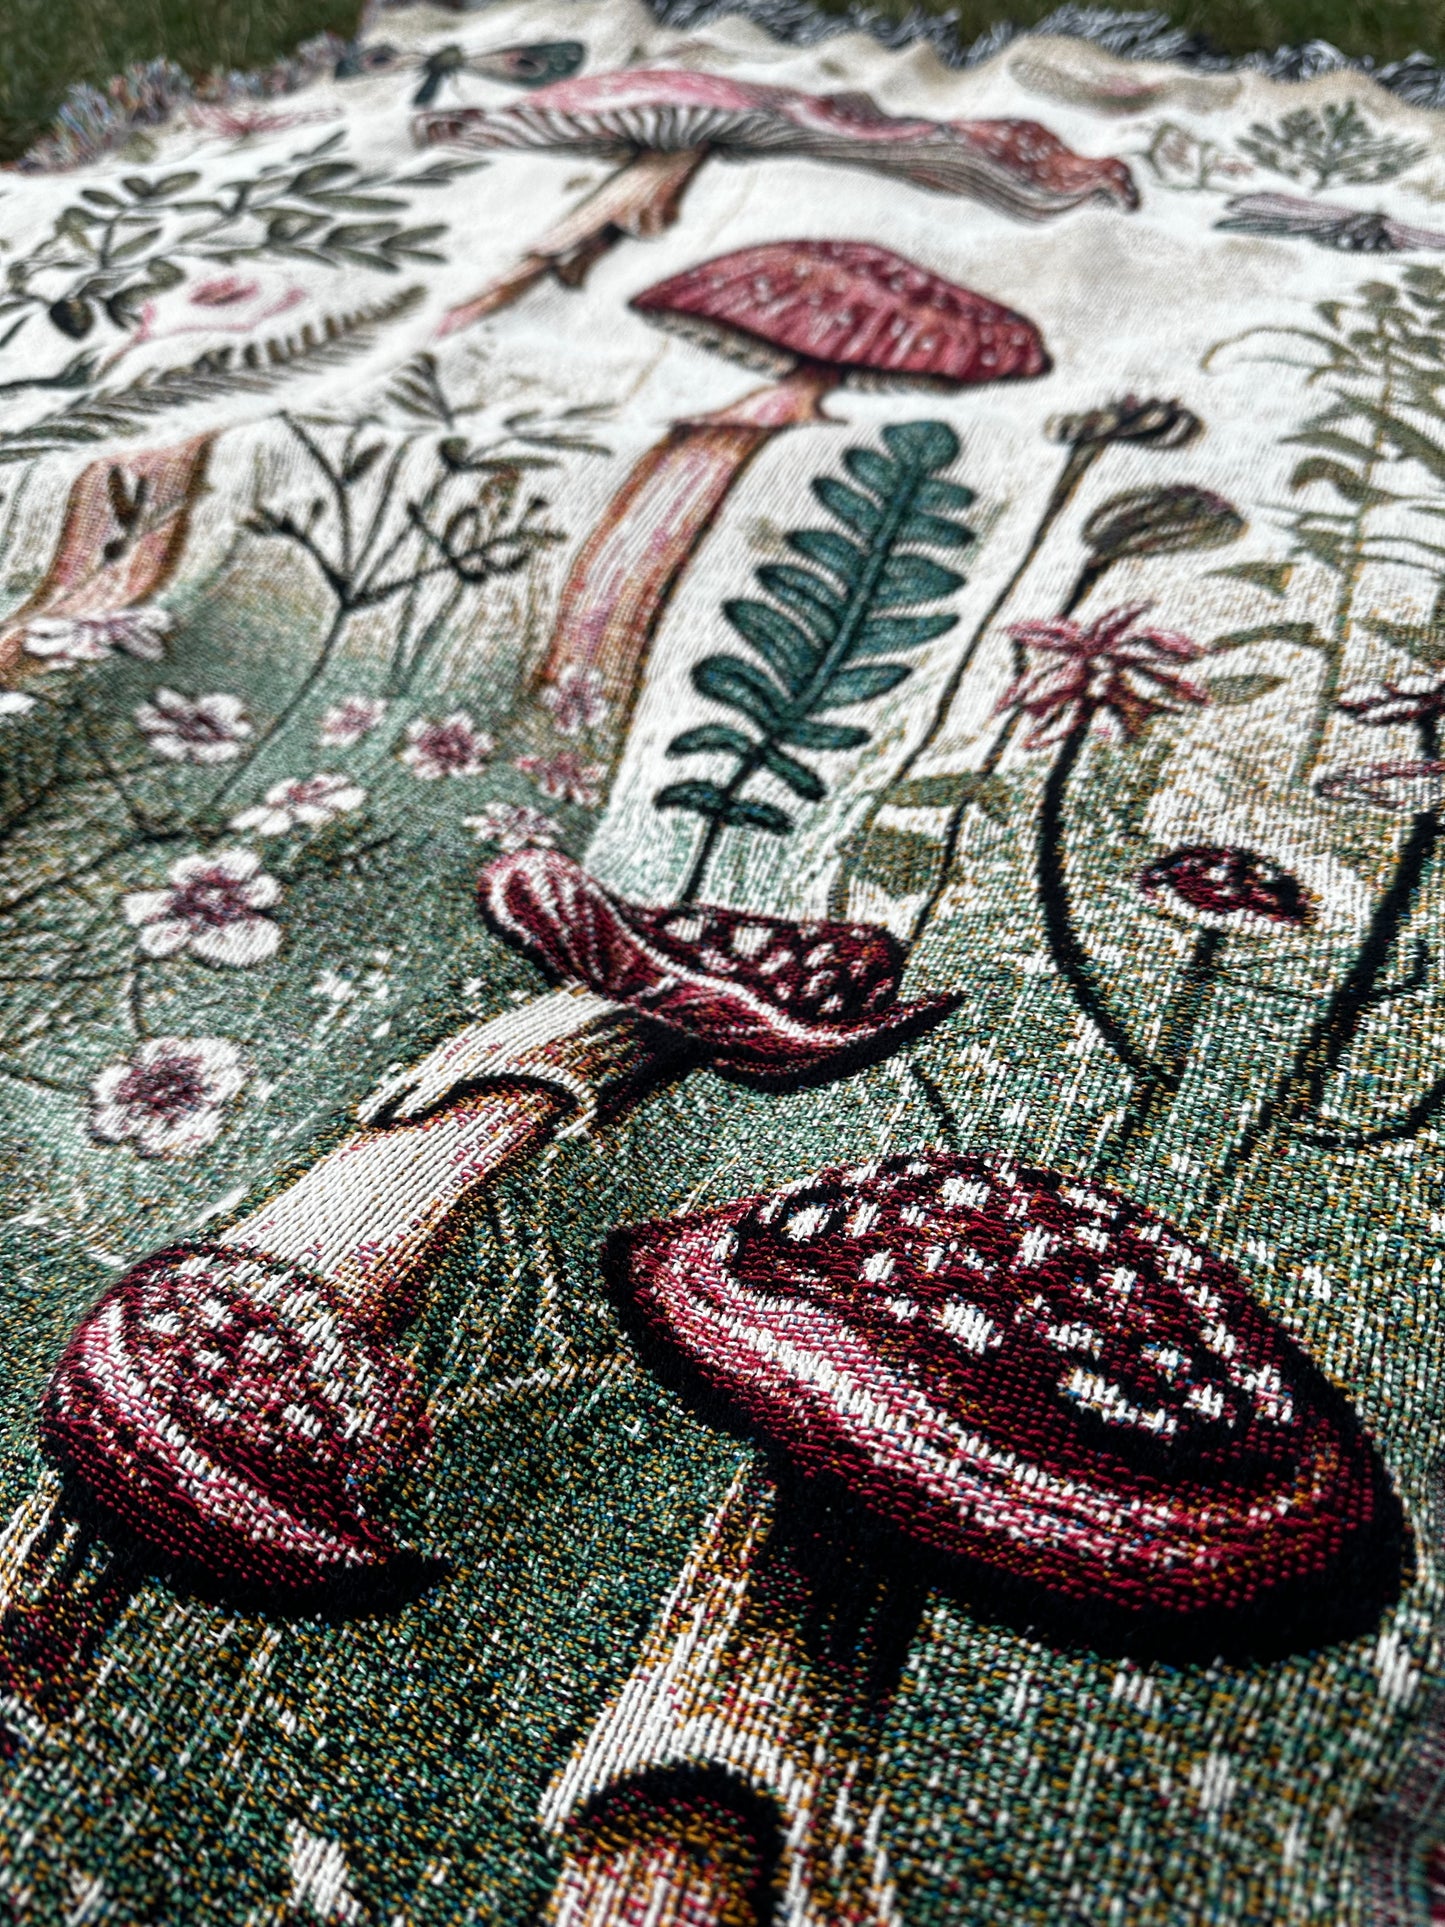 Mushrooms Woven Blanket for cottagecore home decor and mushroom lovers.